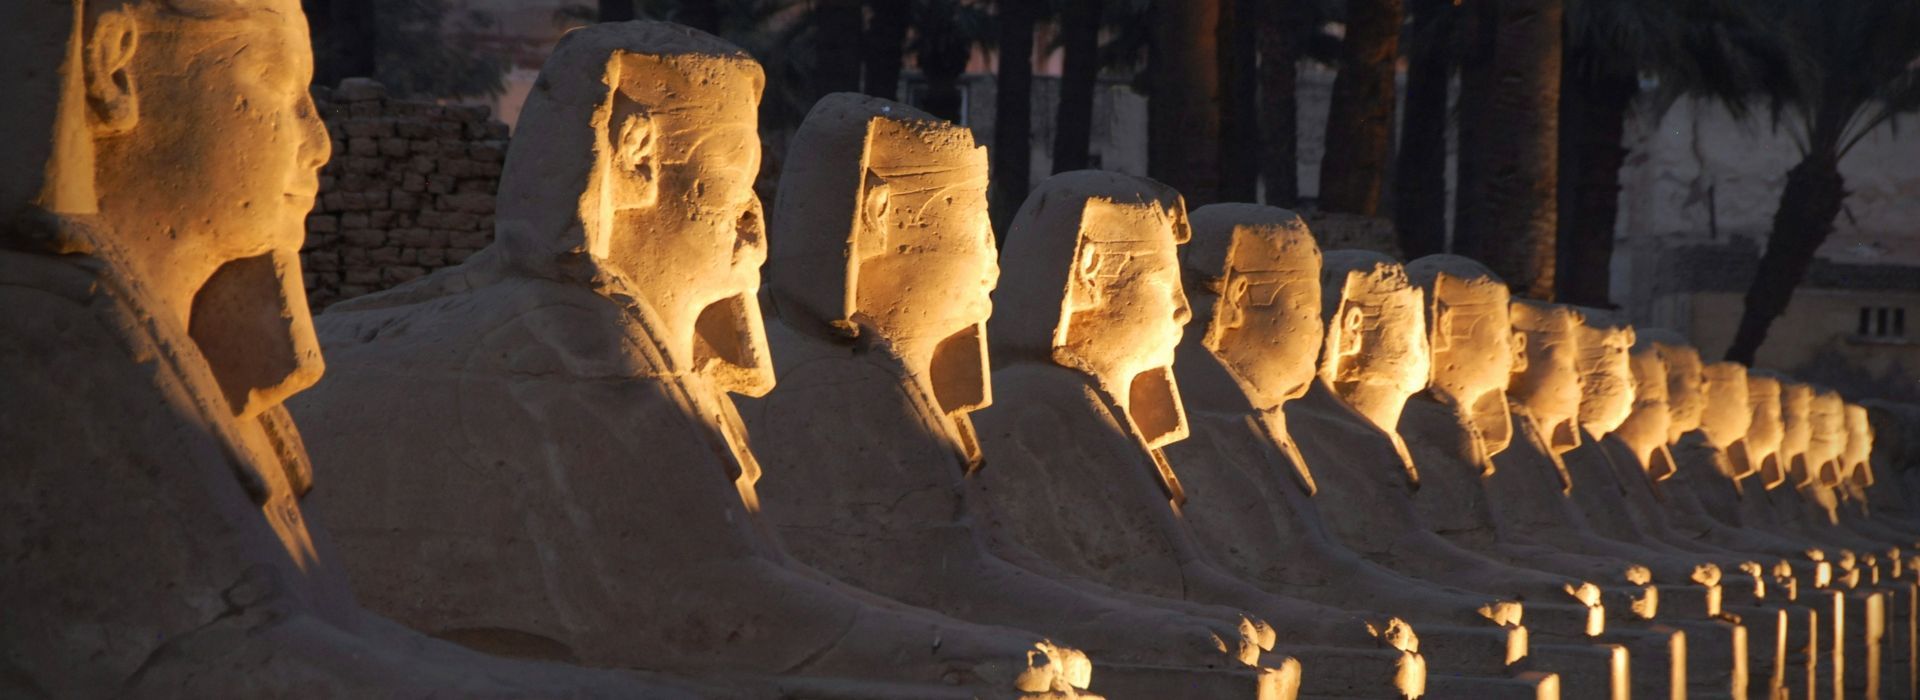 African Travel Inc Egypt - Luxor statues.jpg